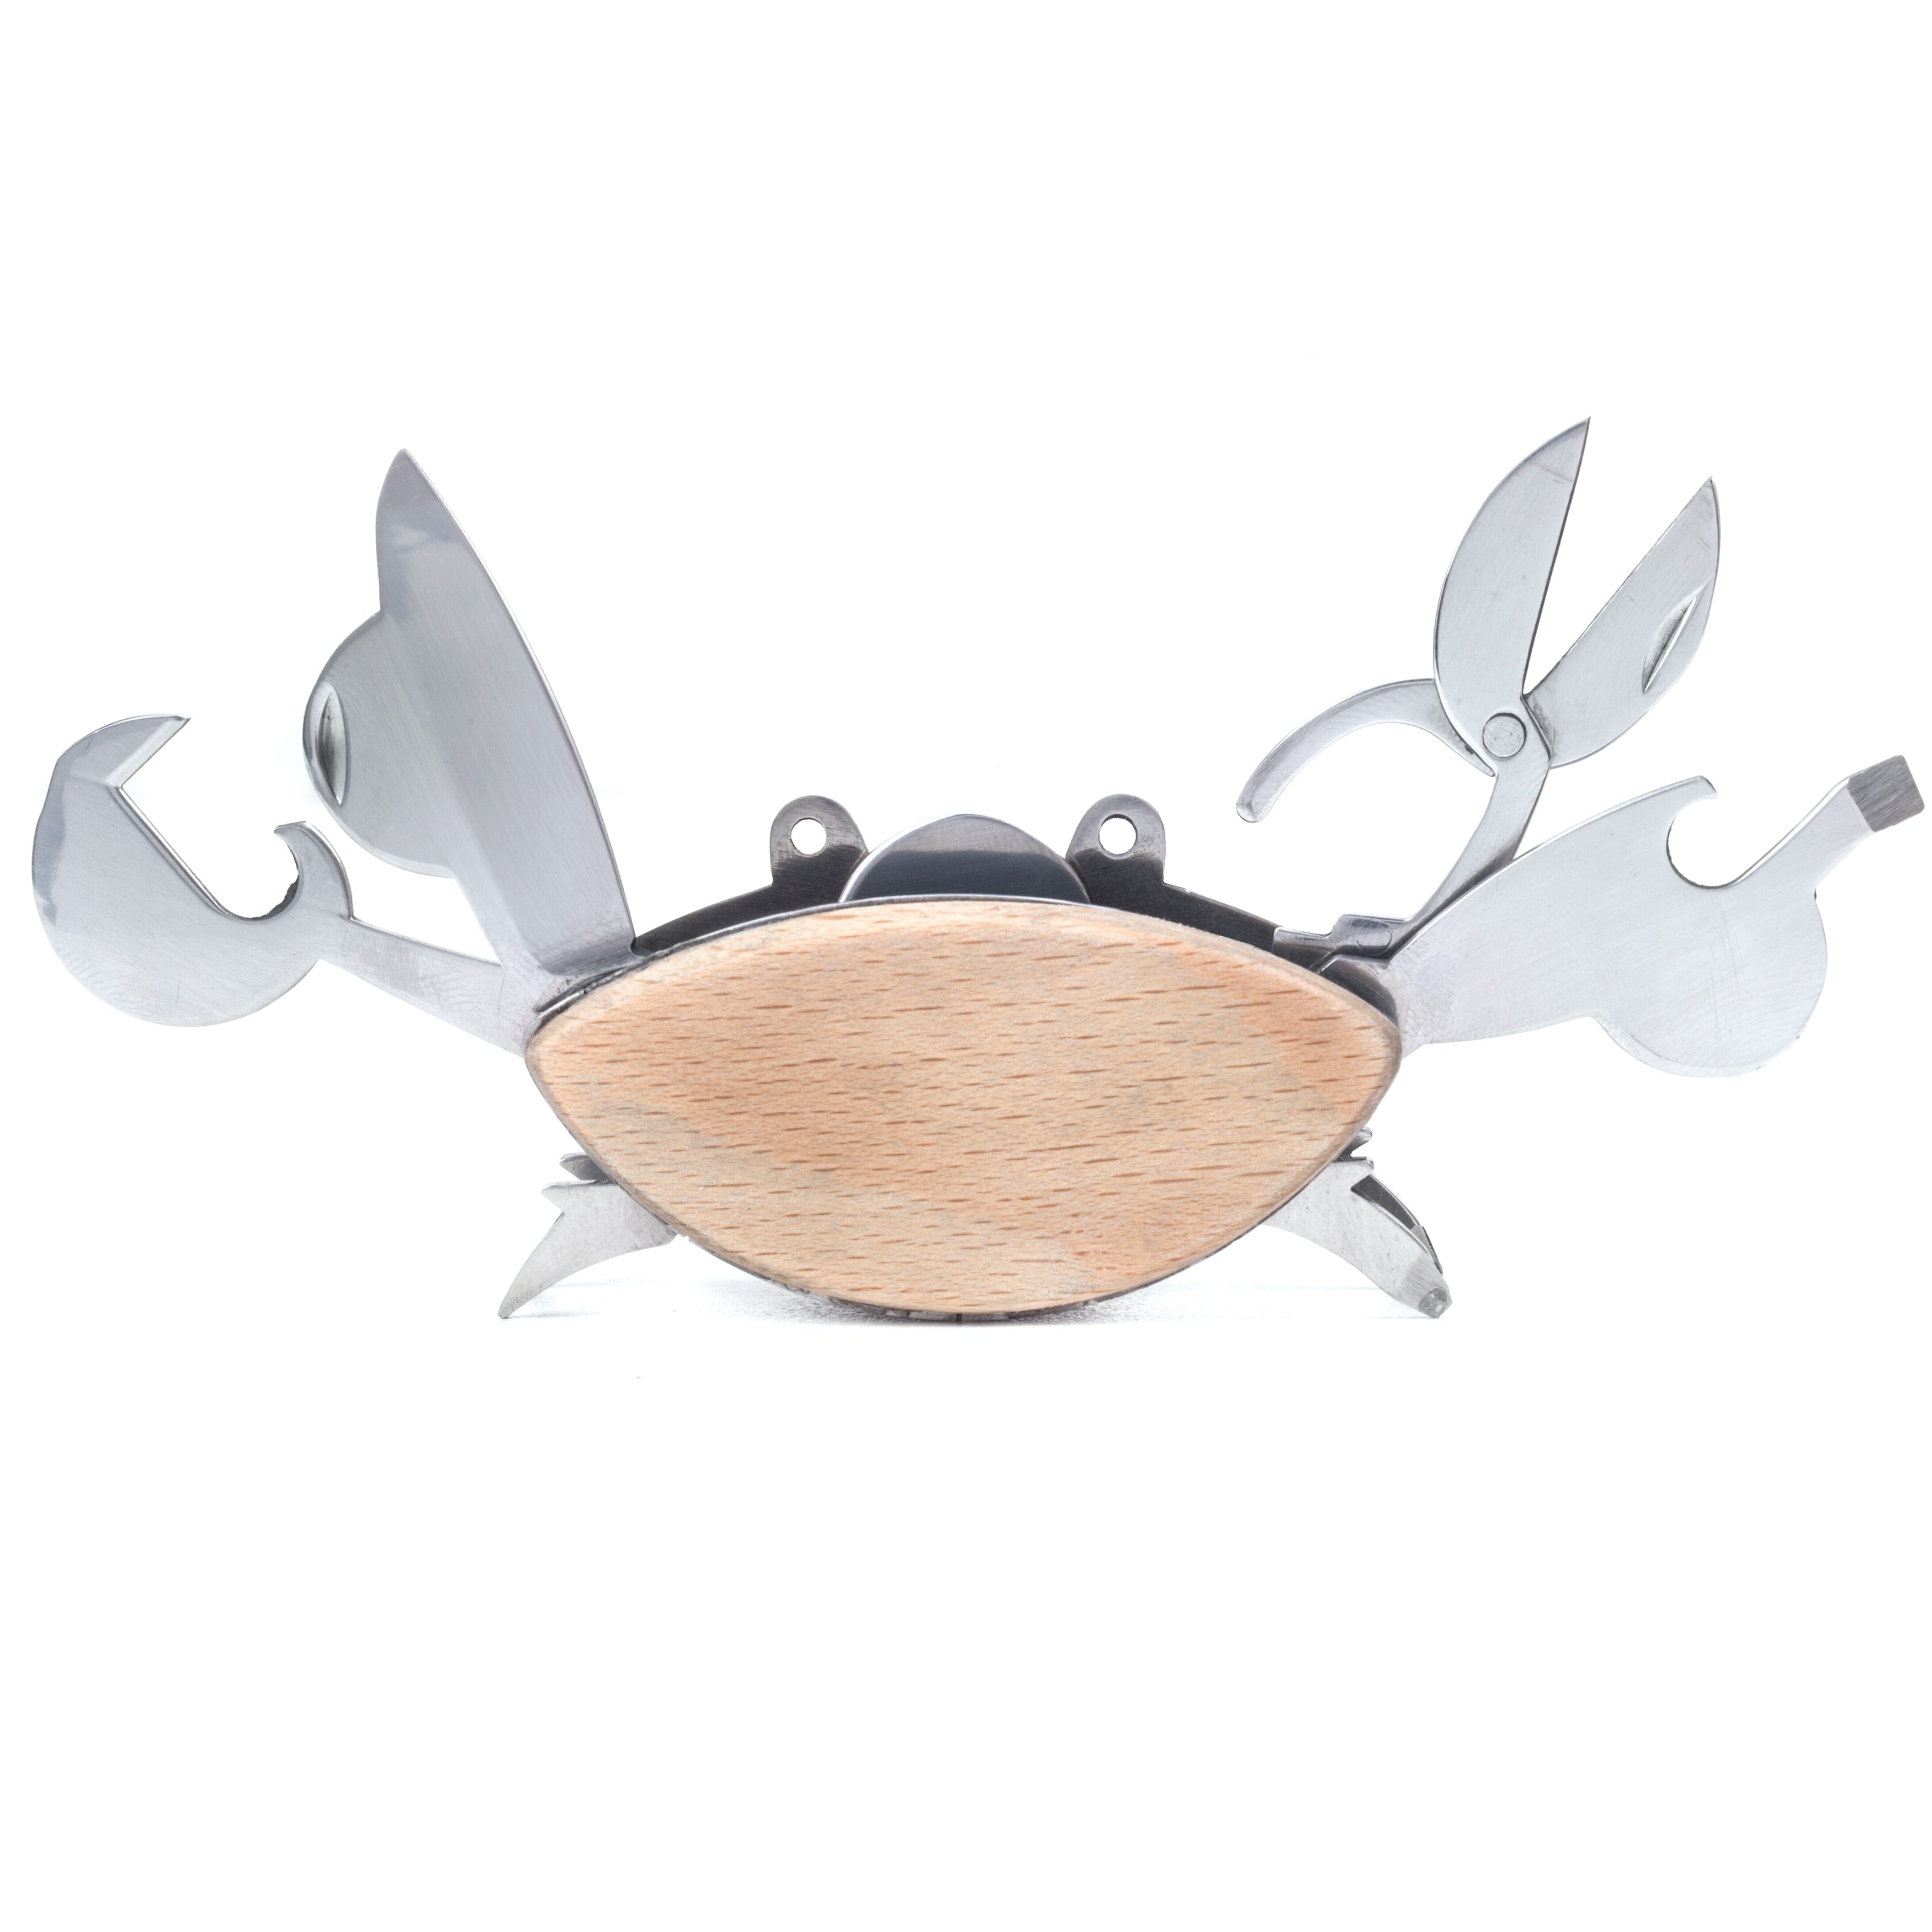 Crab Knife 4 Piece Gift Set